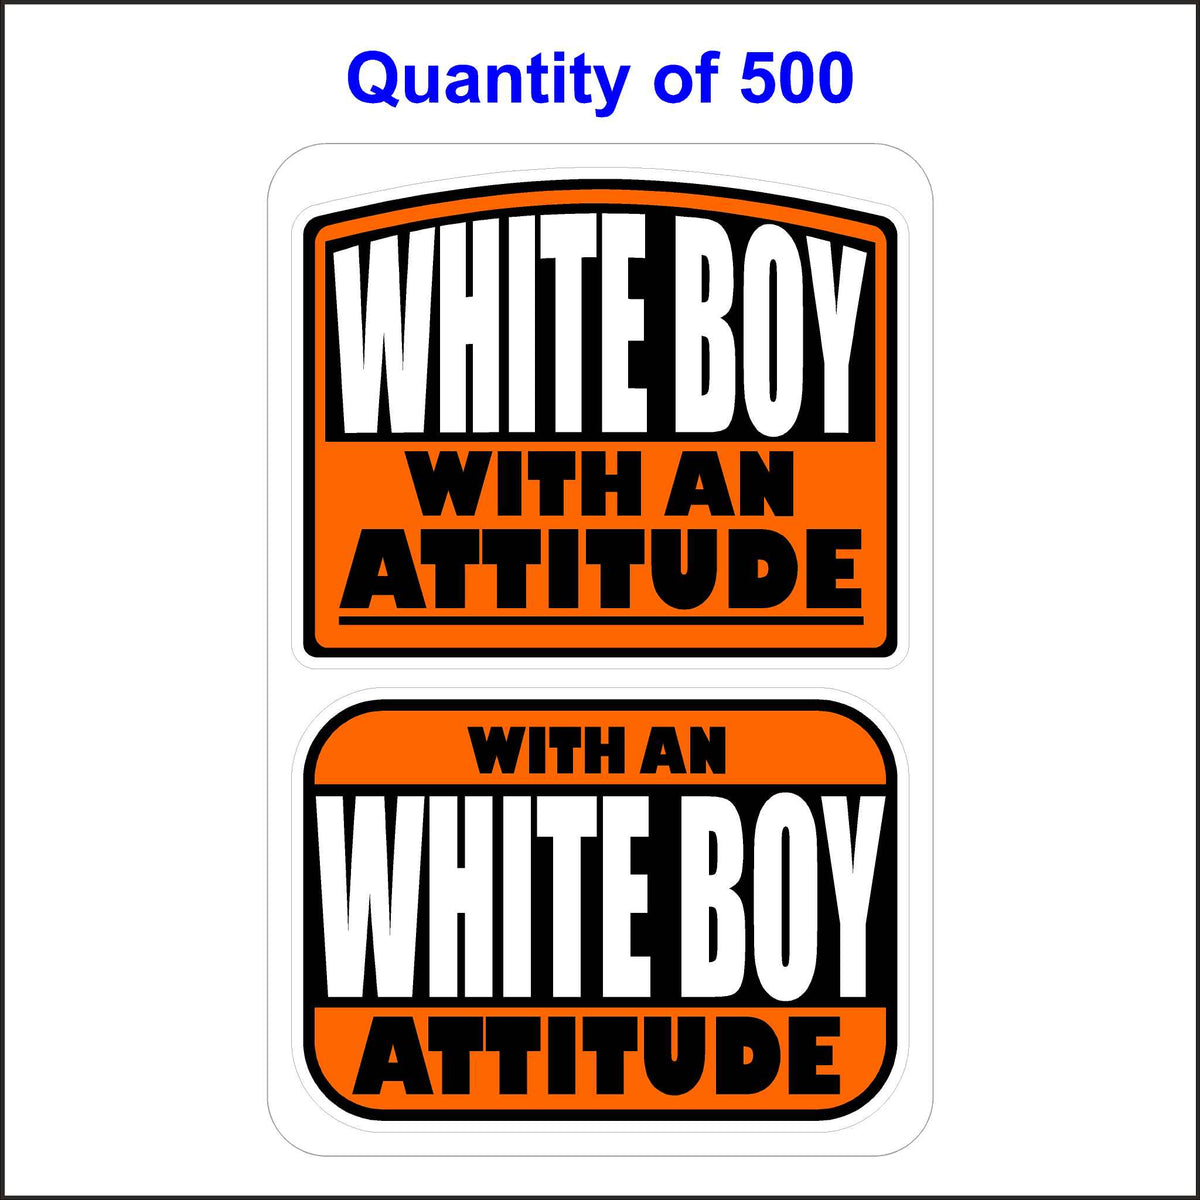 White Boy With An Attitude Stickers 500 Quantity.